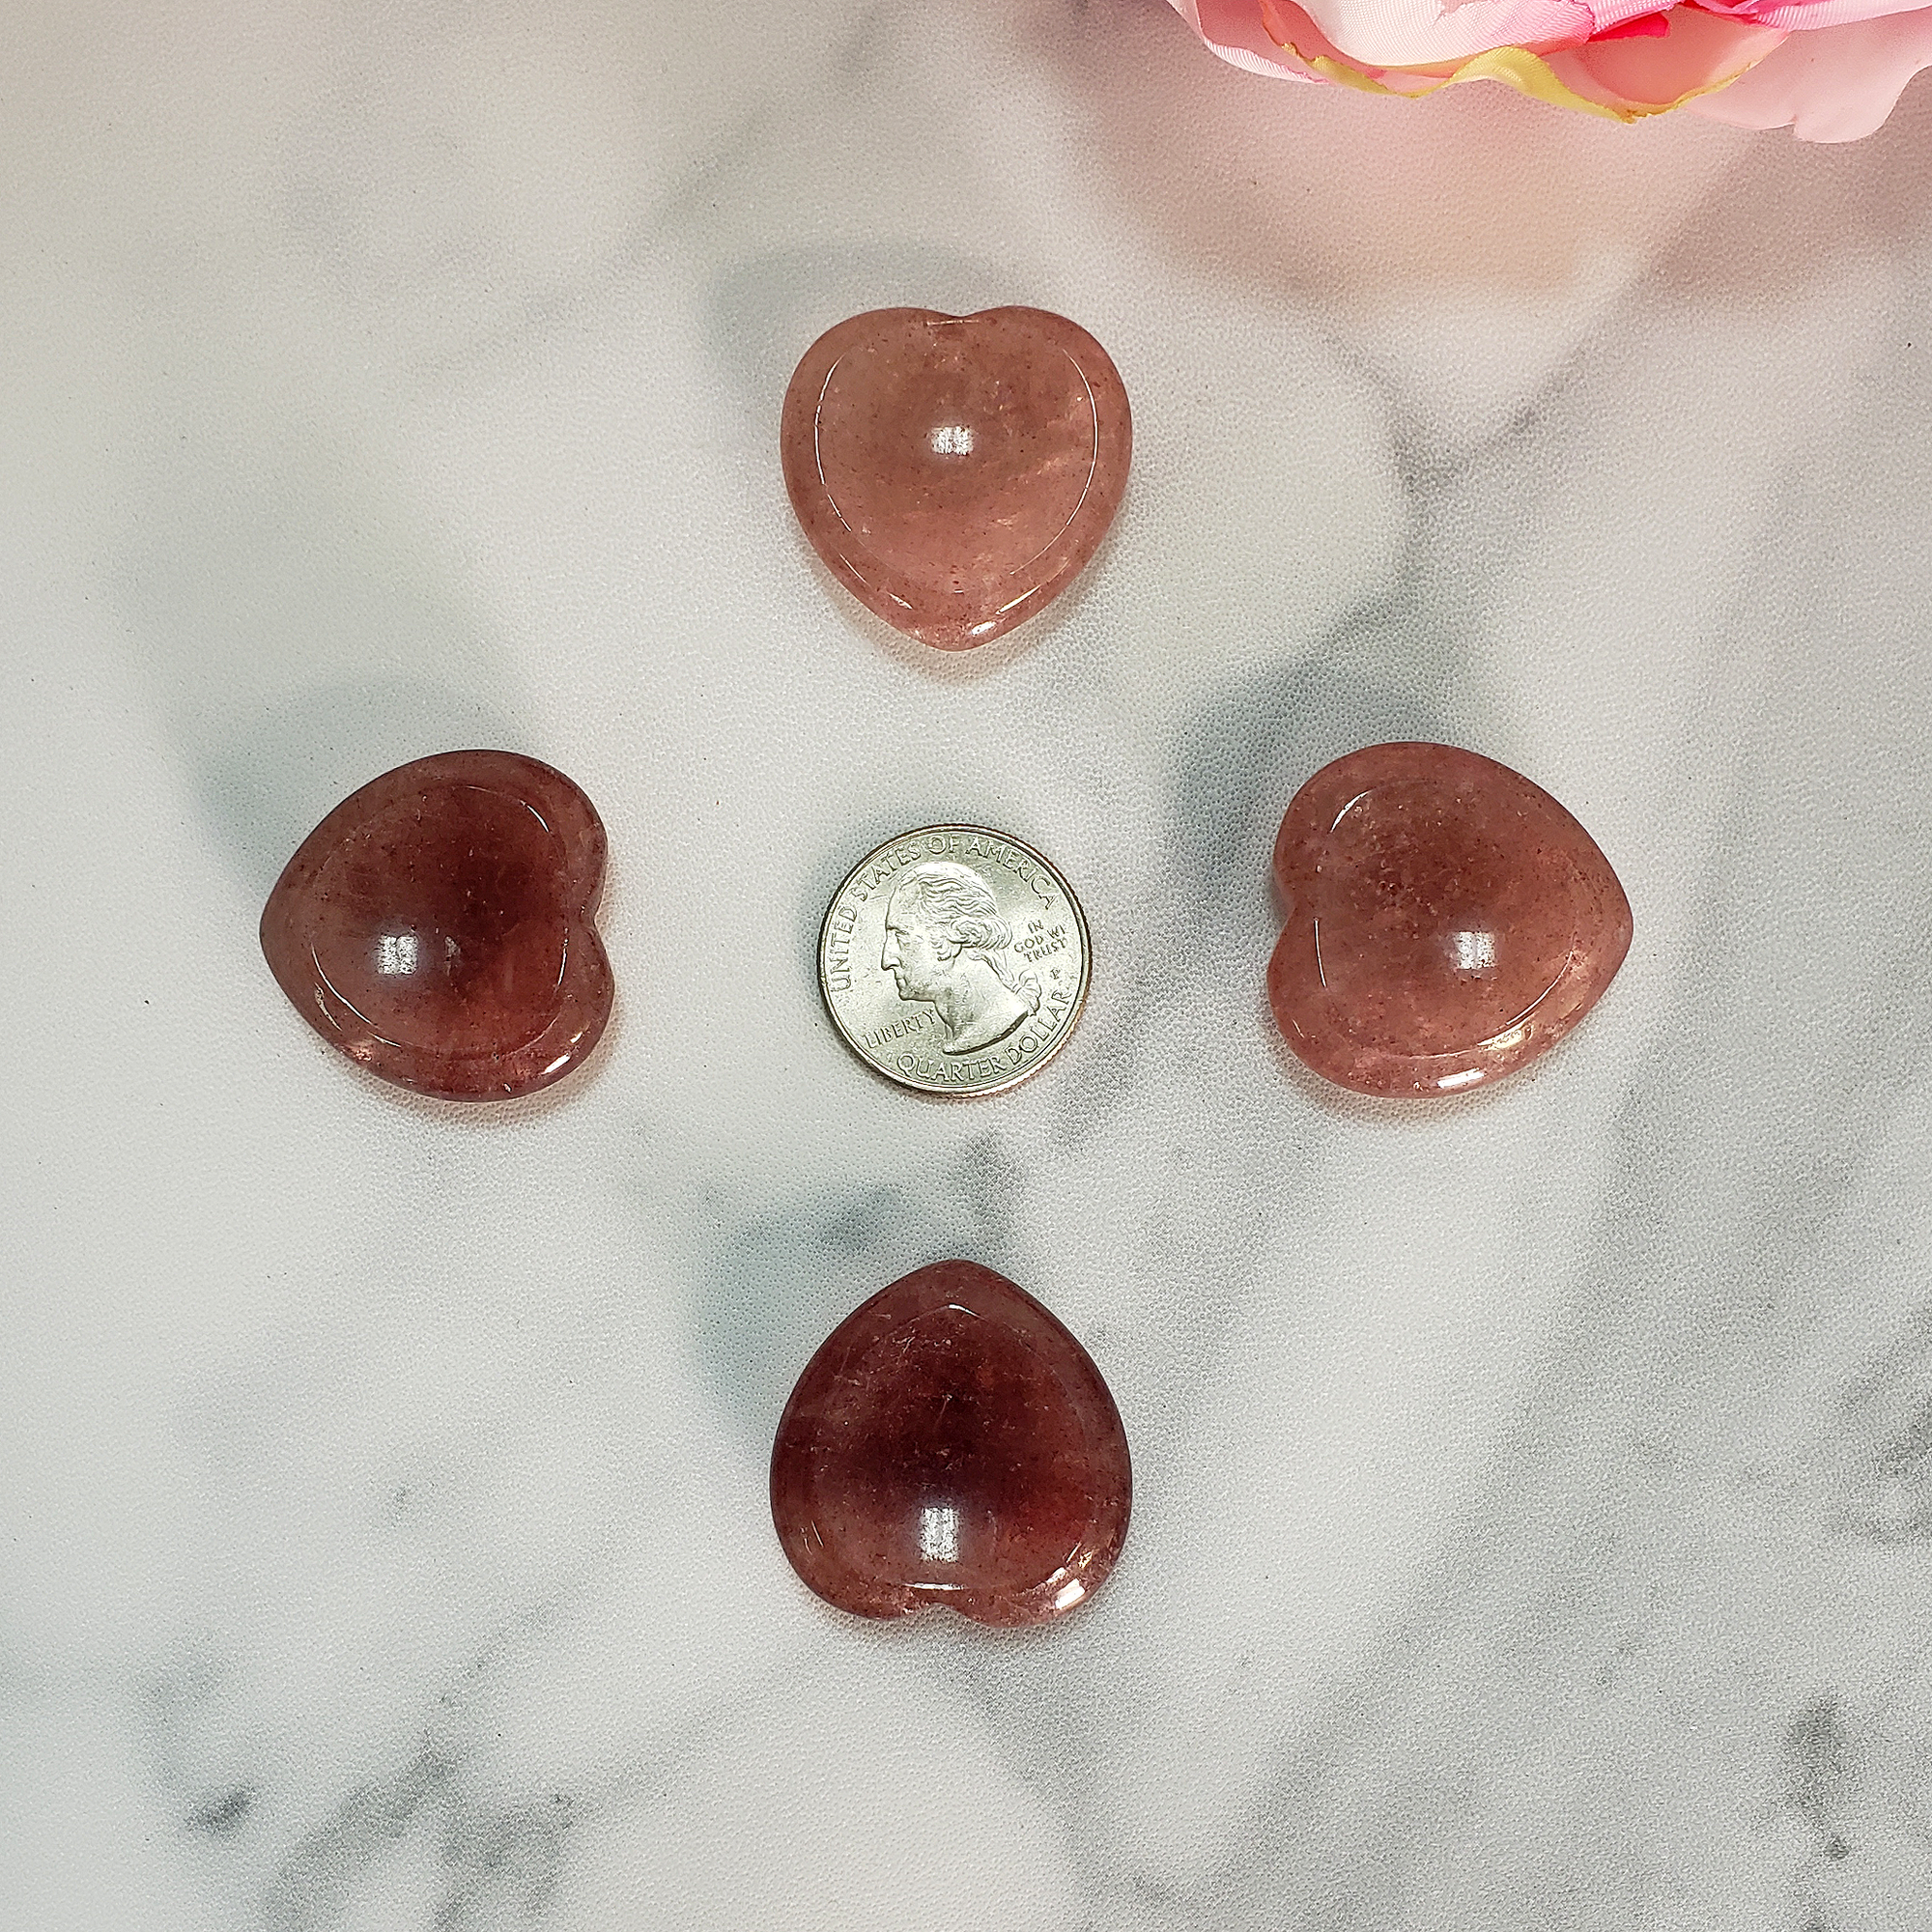 Strawberry Quartz Crystal Heart Shaped Worry Stone - Size Comparison